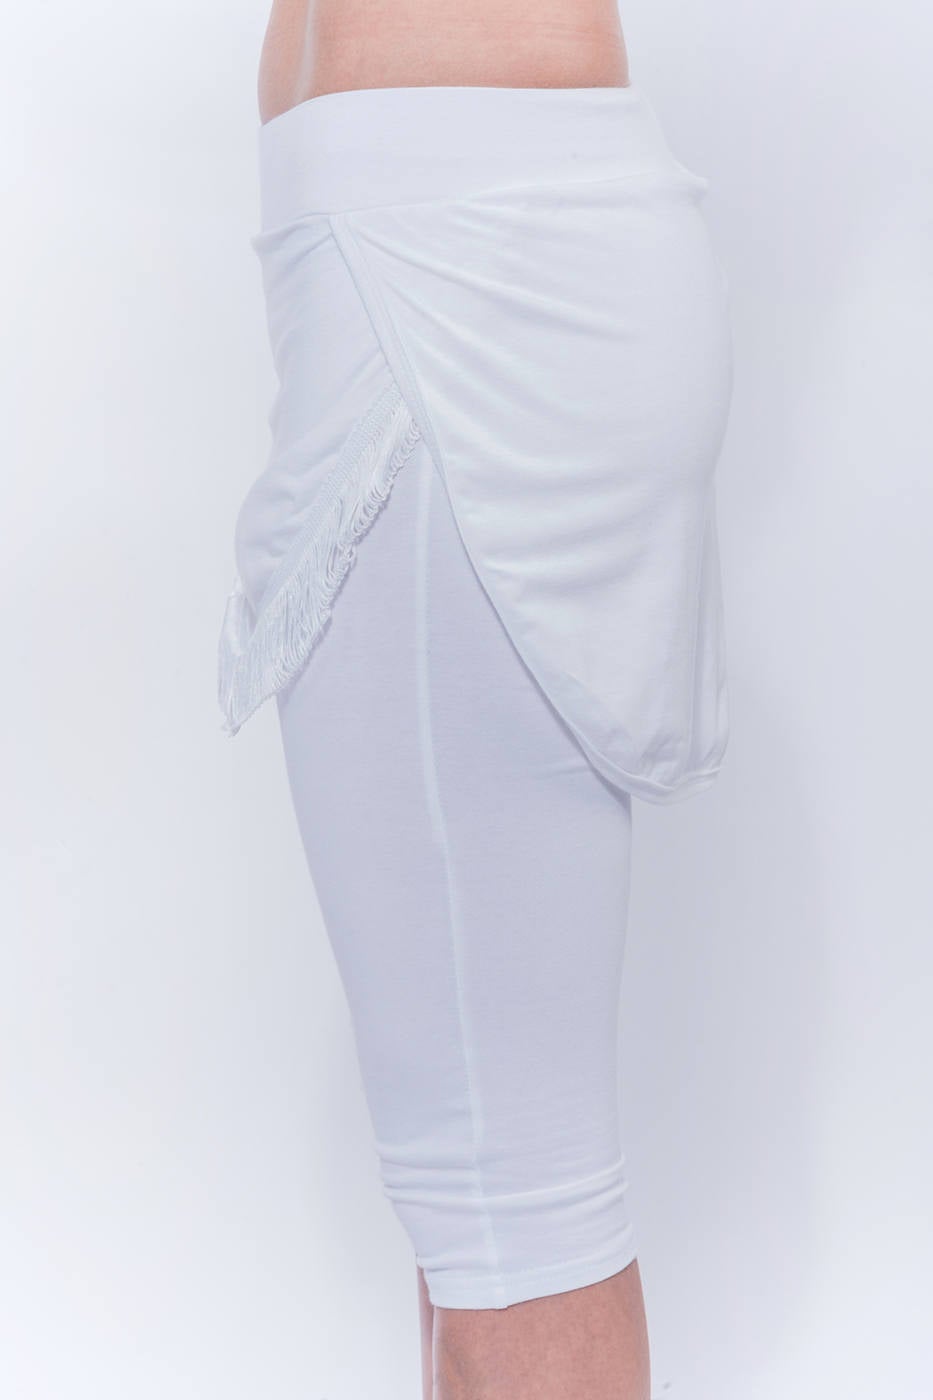 Women's White Cotton Cropped Kundalini Yoga Legging's